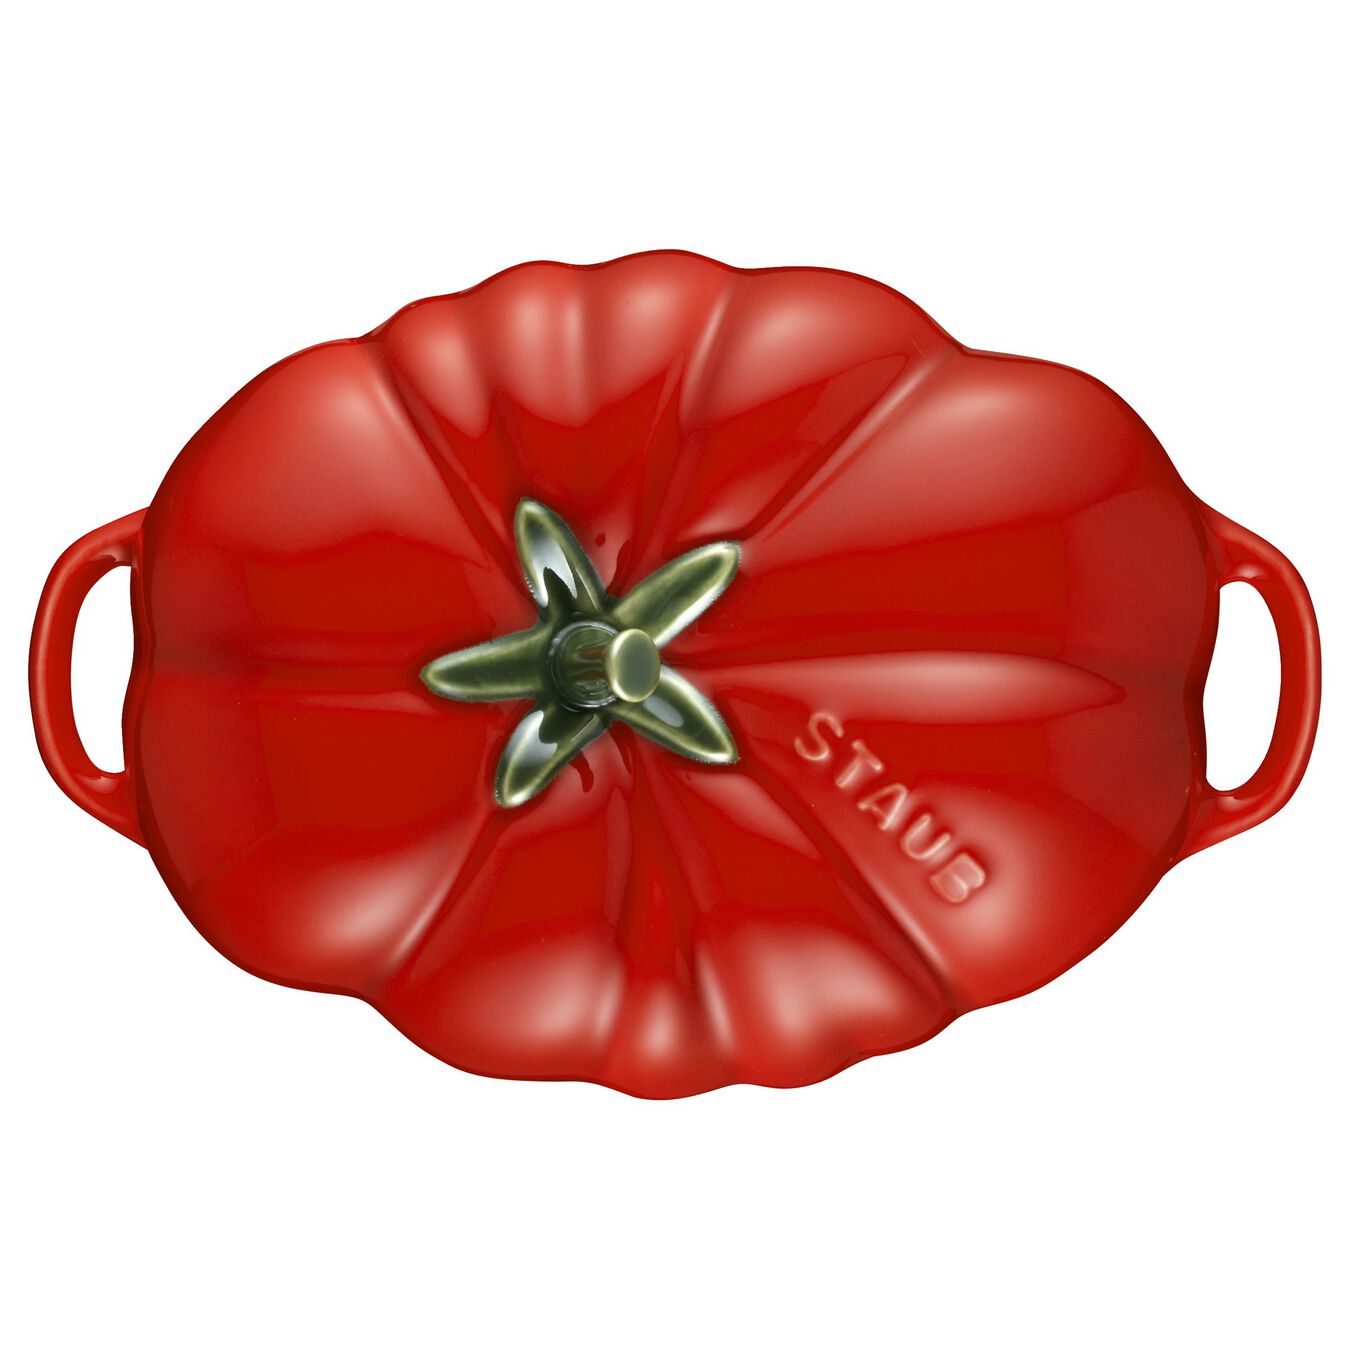 Cocotte 16 cm, Tomat, Kirsebærrød, Keramisk,,large 5